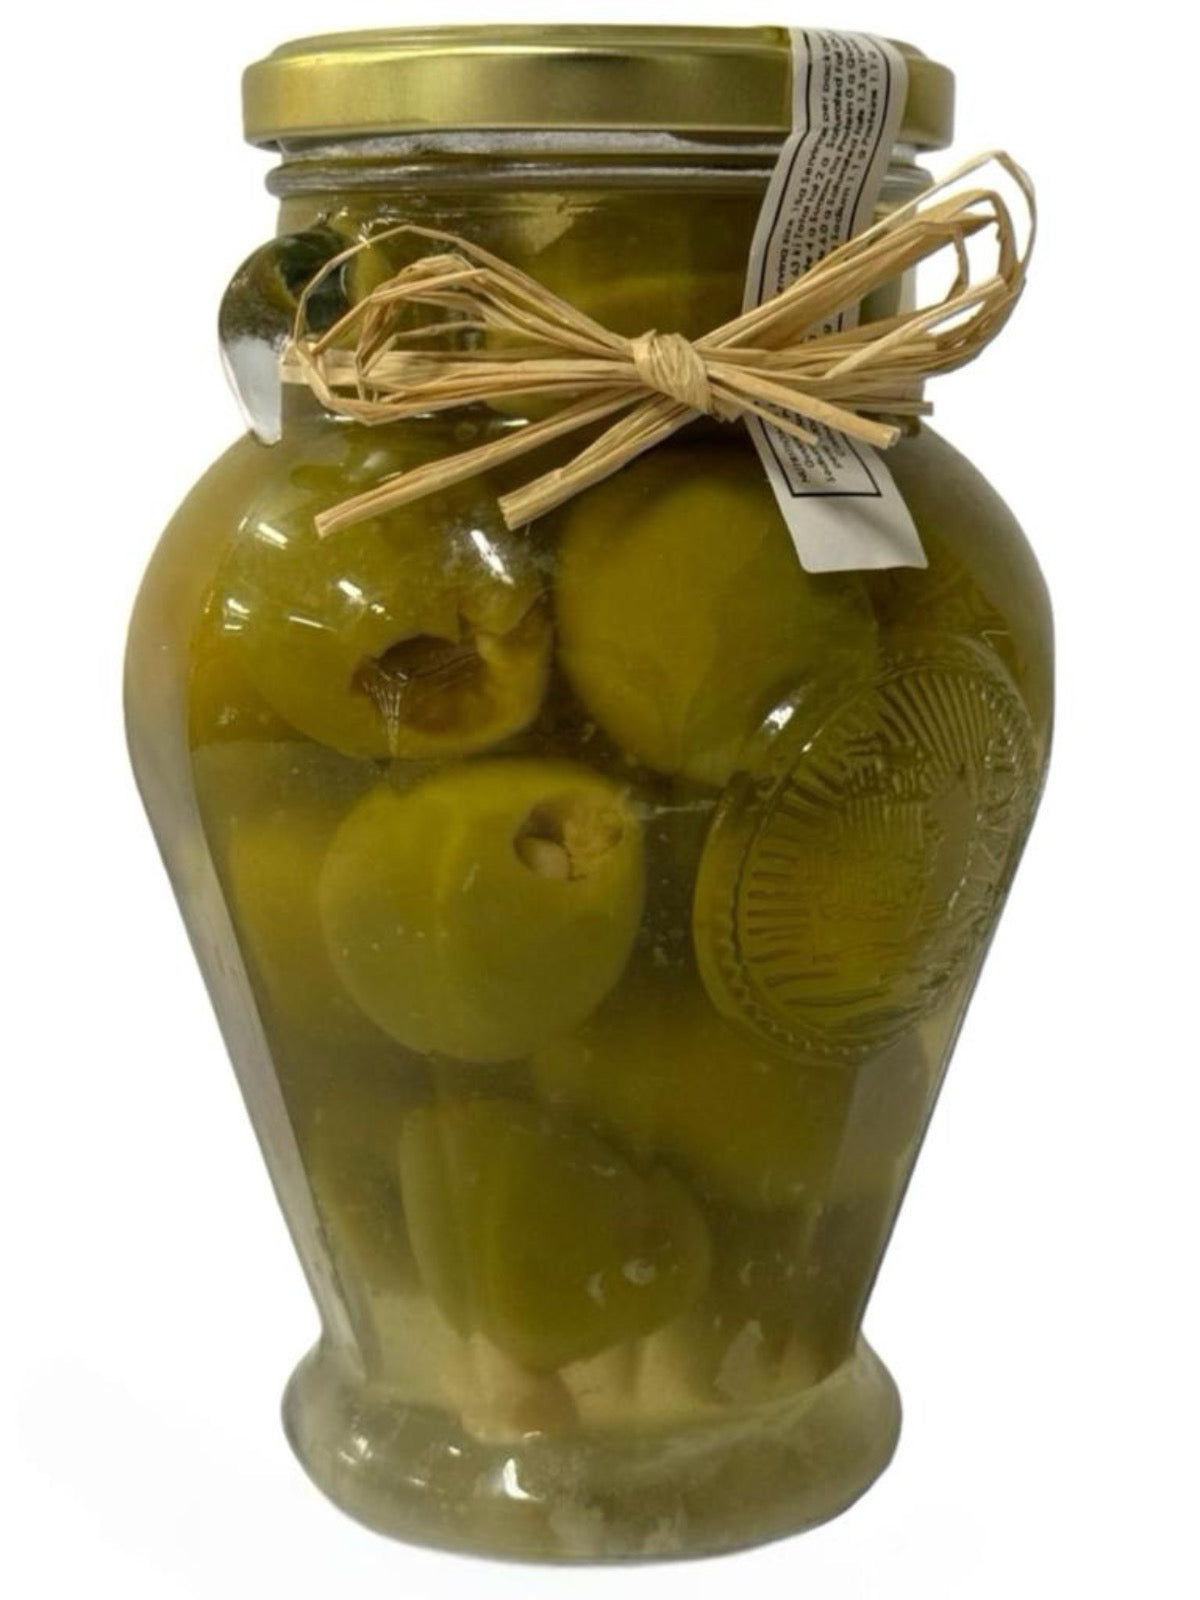 Torremar Spanish Garlic Stuffed Gordal Olives 580g Best Before April 2027